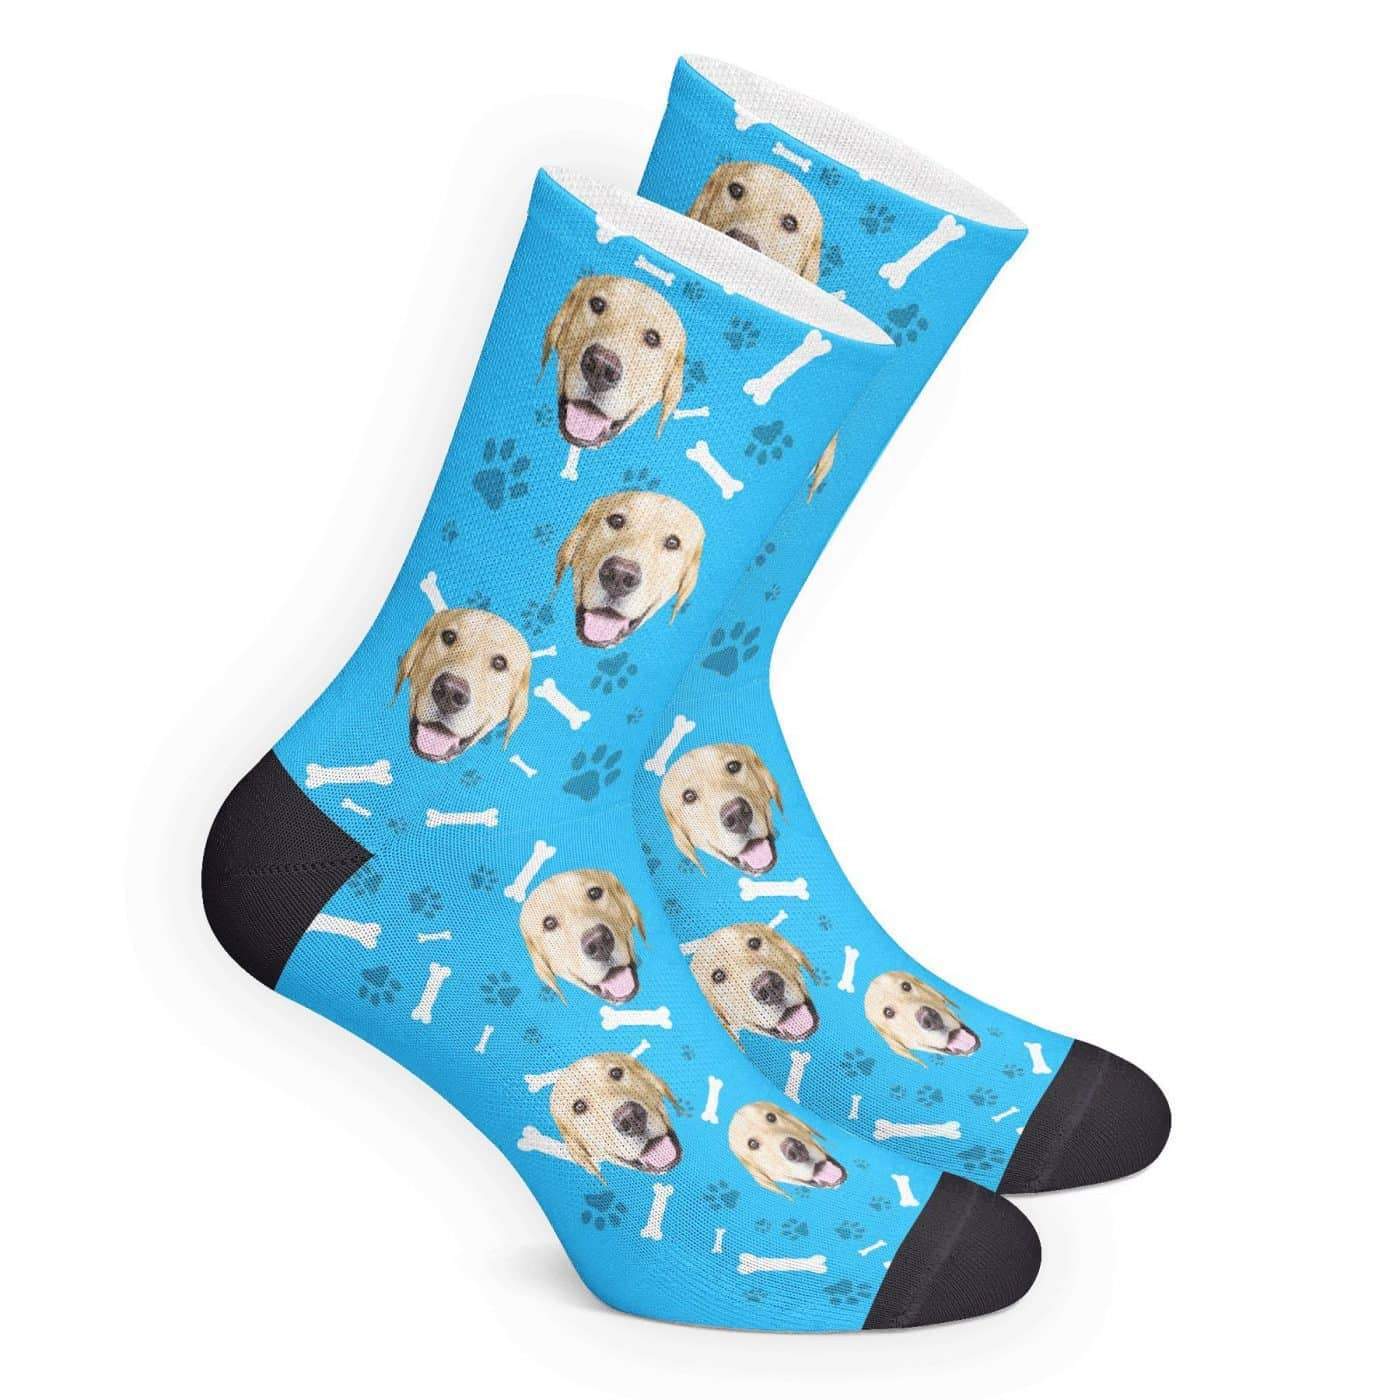 Personalised Dog Socks Custom Pet Face Socks - Best Gift Idea